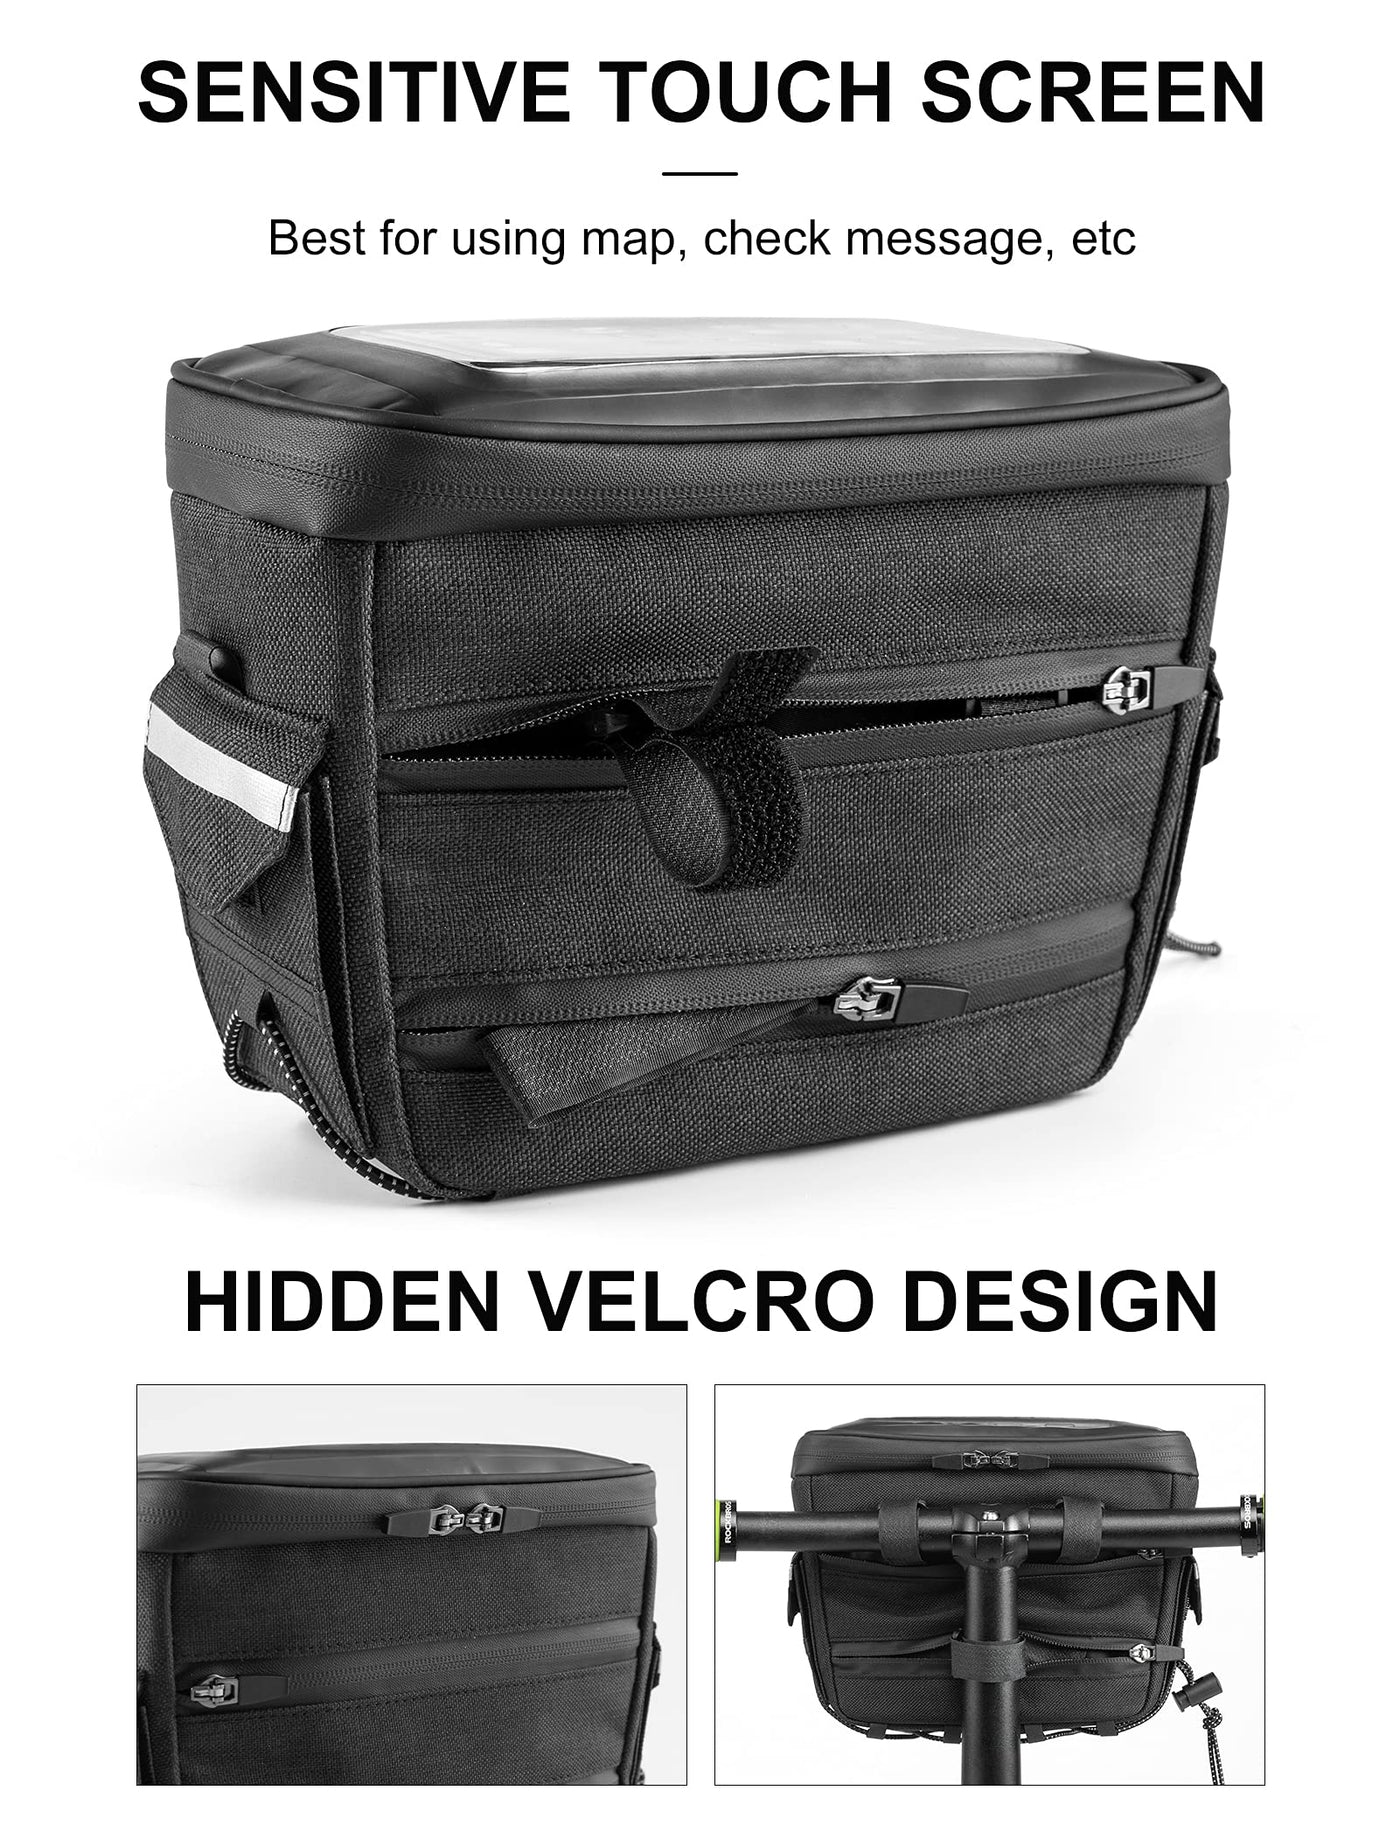 ROCKBROS Handlebar Bag Bicycle Front Storage Bag-EZbike Canada